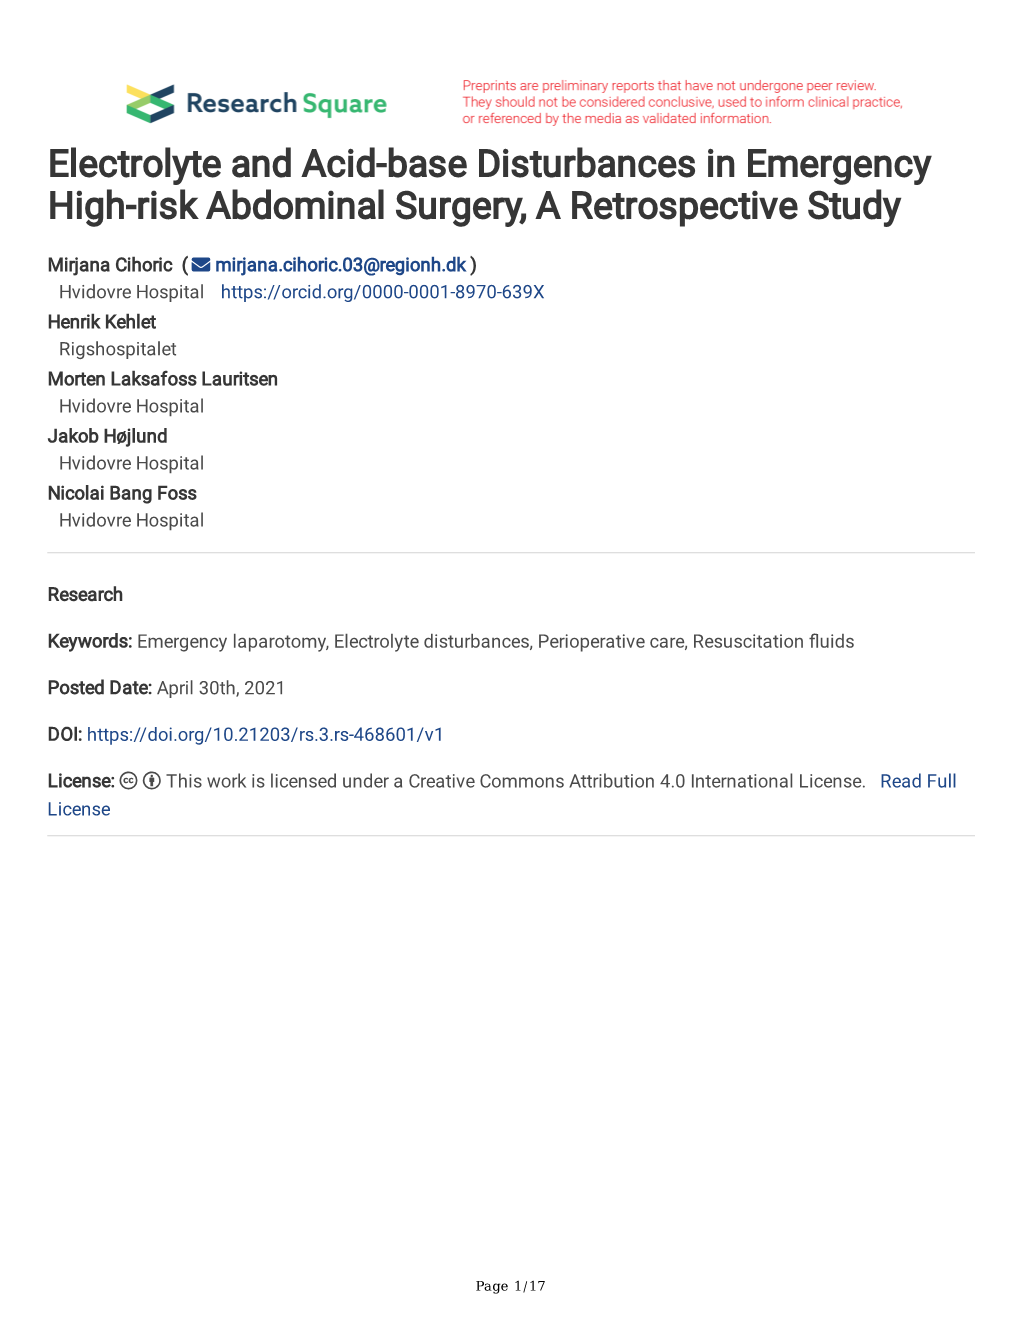 Electrolyte and Acid-Base Disturbances in Emergency High-Risk Abdominal Surgery, a Retrospective Study